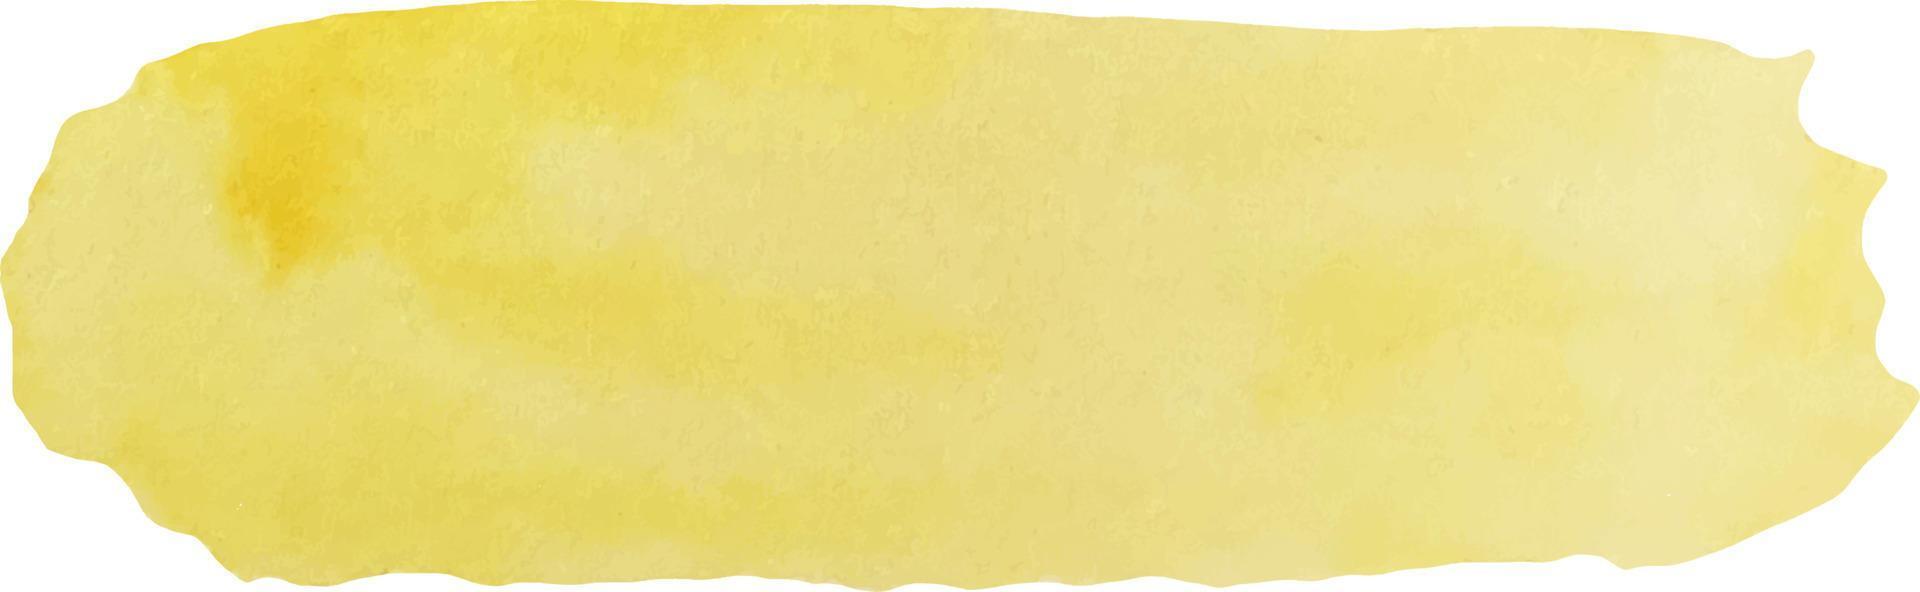 fundo amarelo abstrato aquarela com textura de mancha, spray, respingo e local, elementos de moda vetor